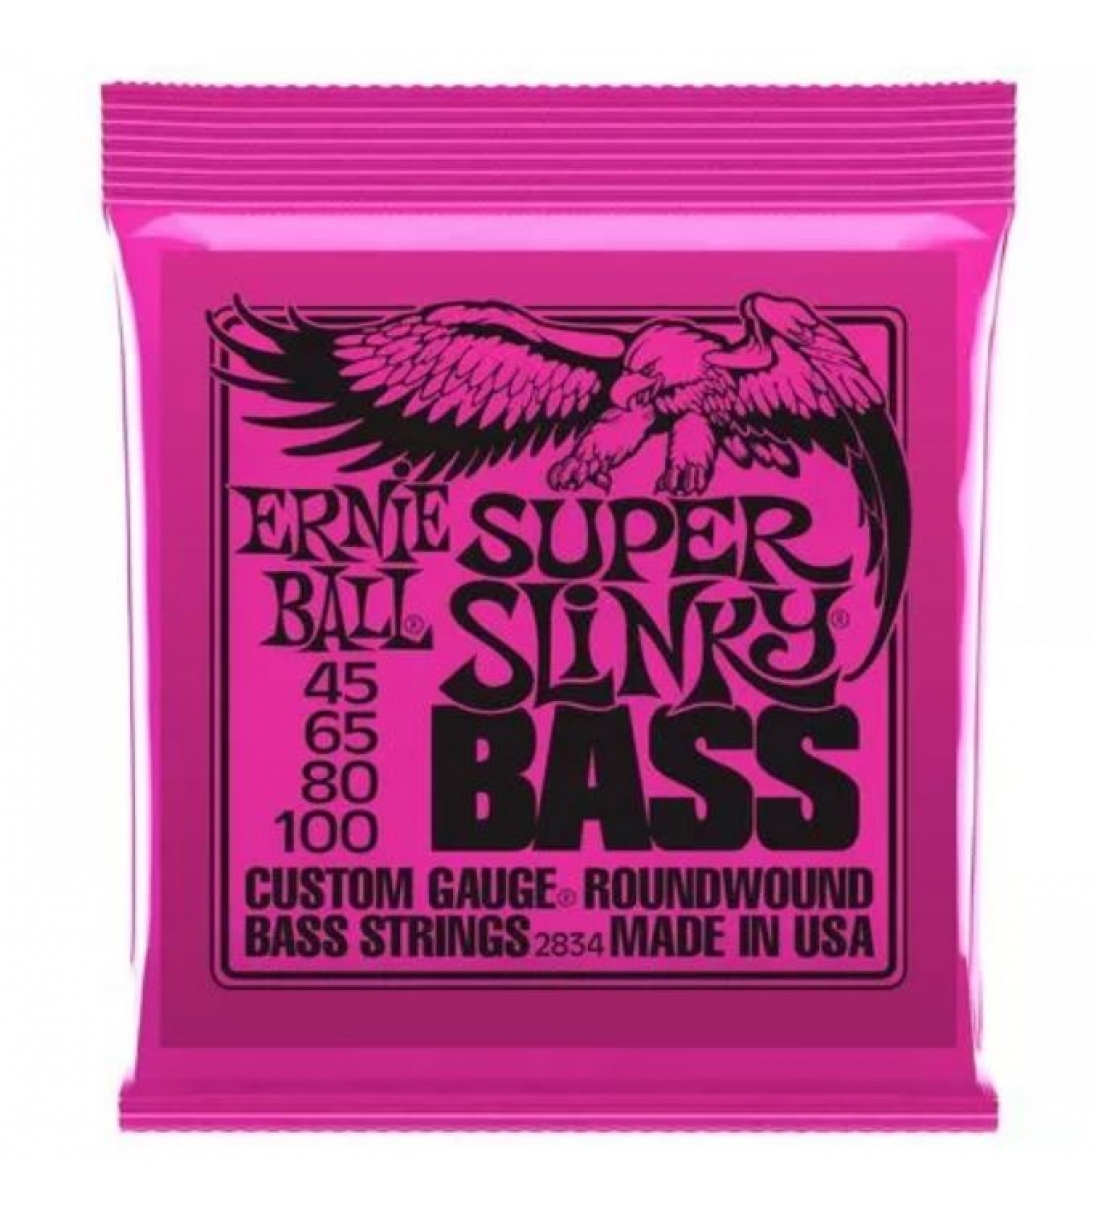 Corde per Basso 2834 Super Slinky Bass 045/100